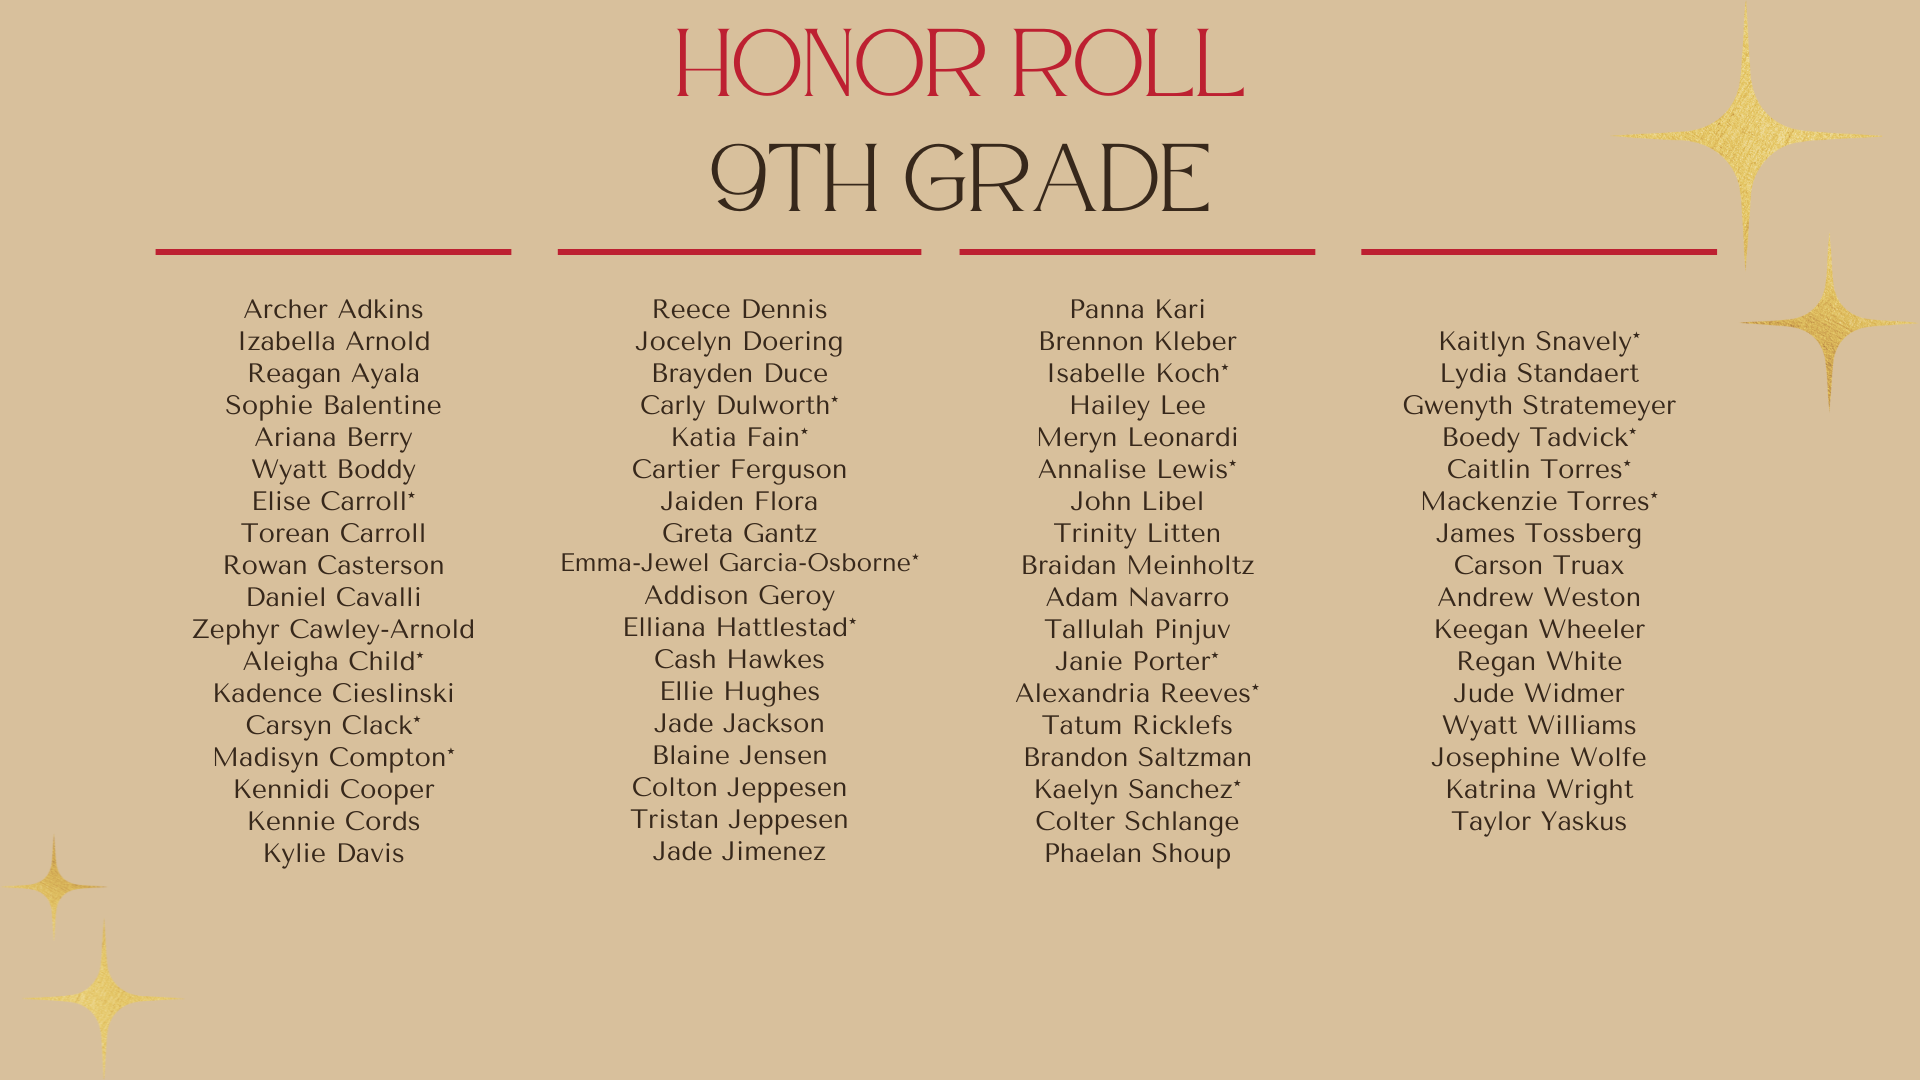 High Honor Roll 9th grade